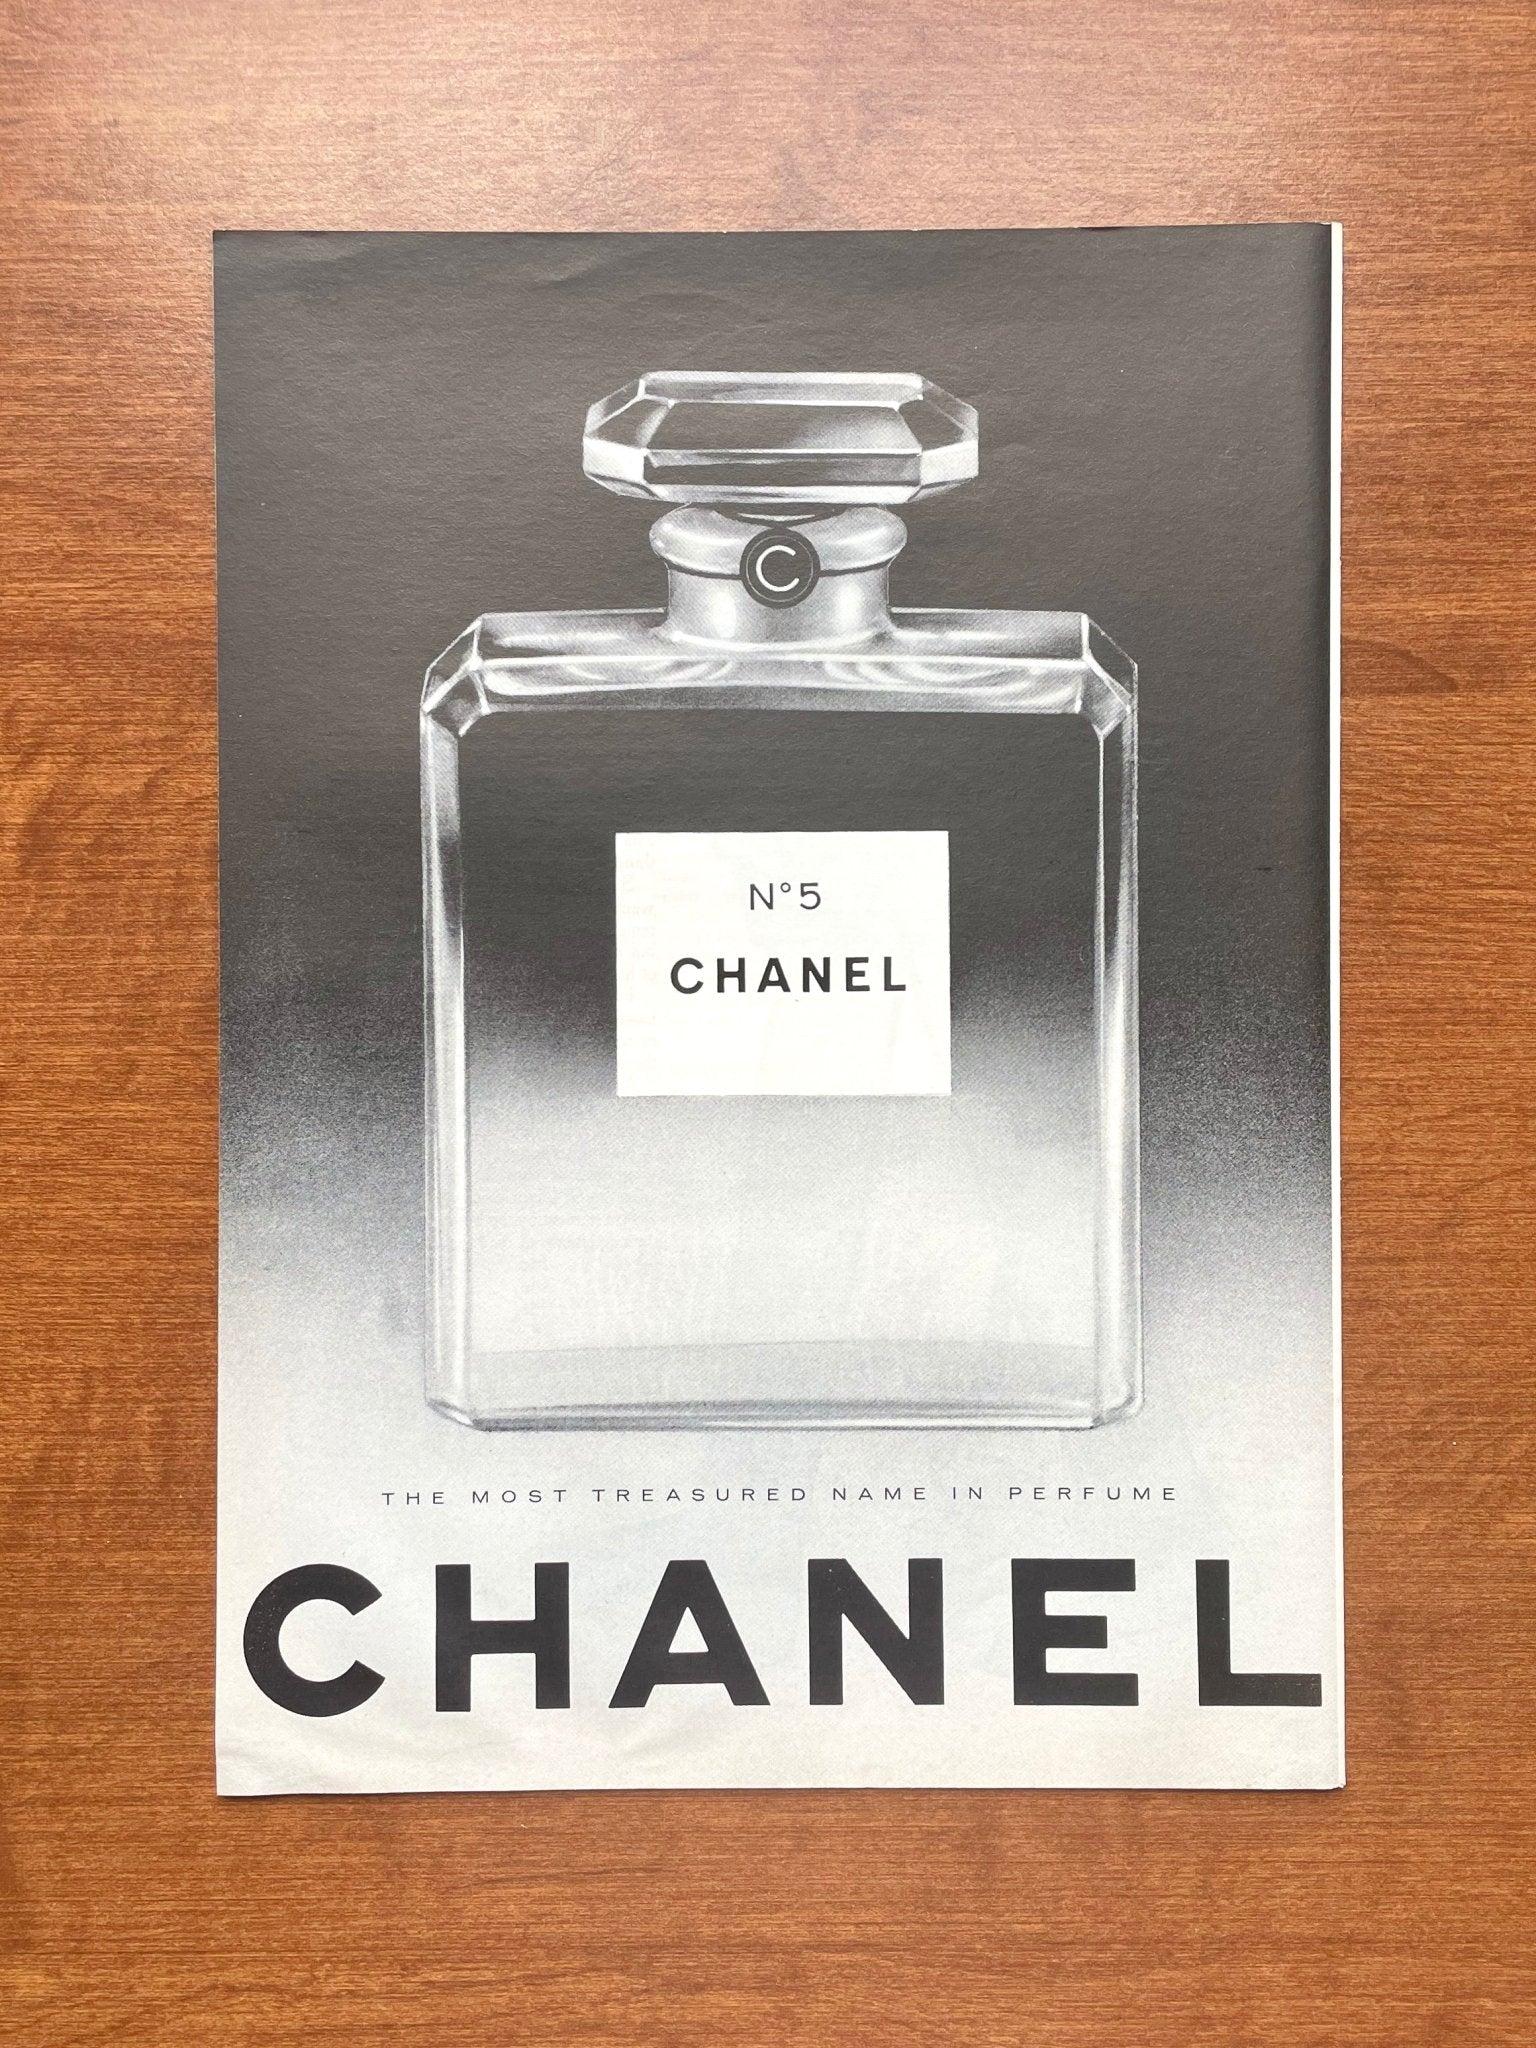 1965 Chanel No 5 Perfume Advertisement